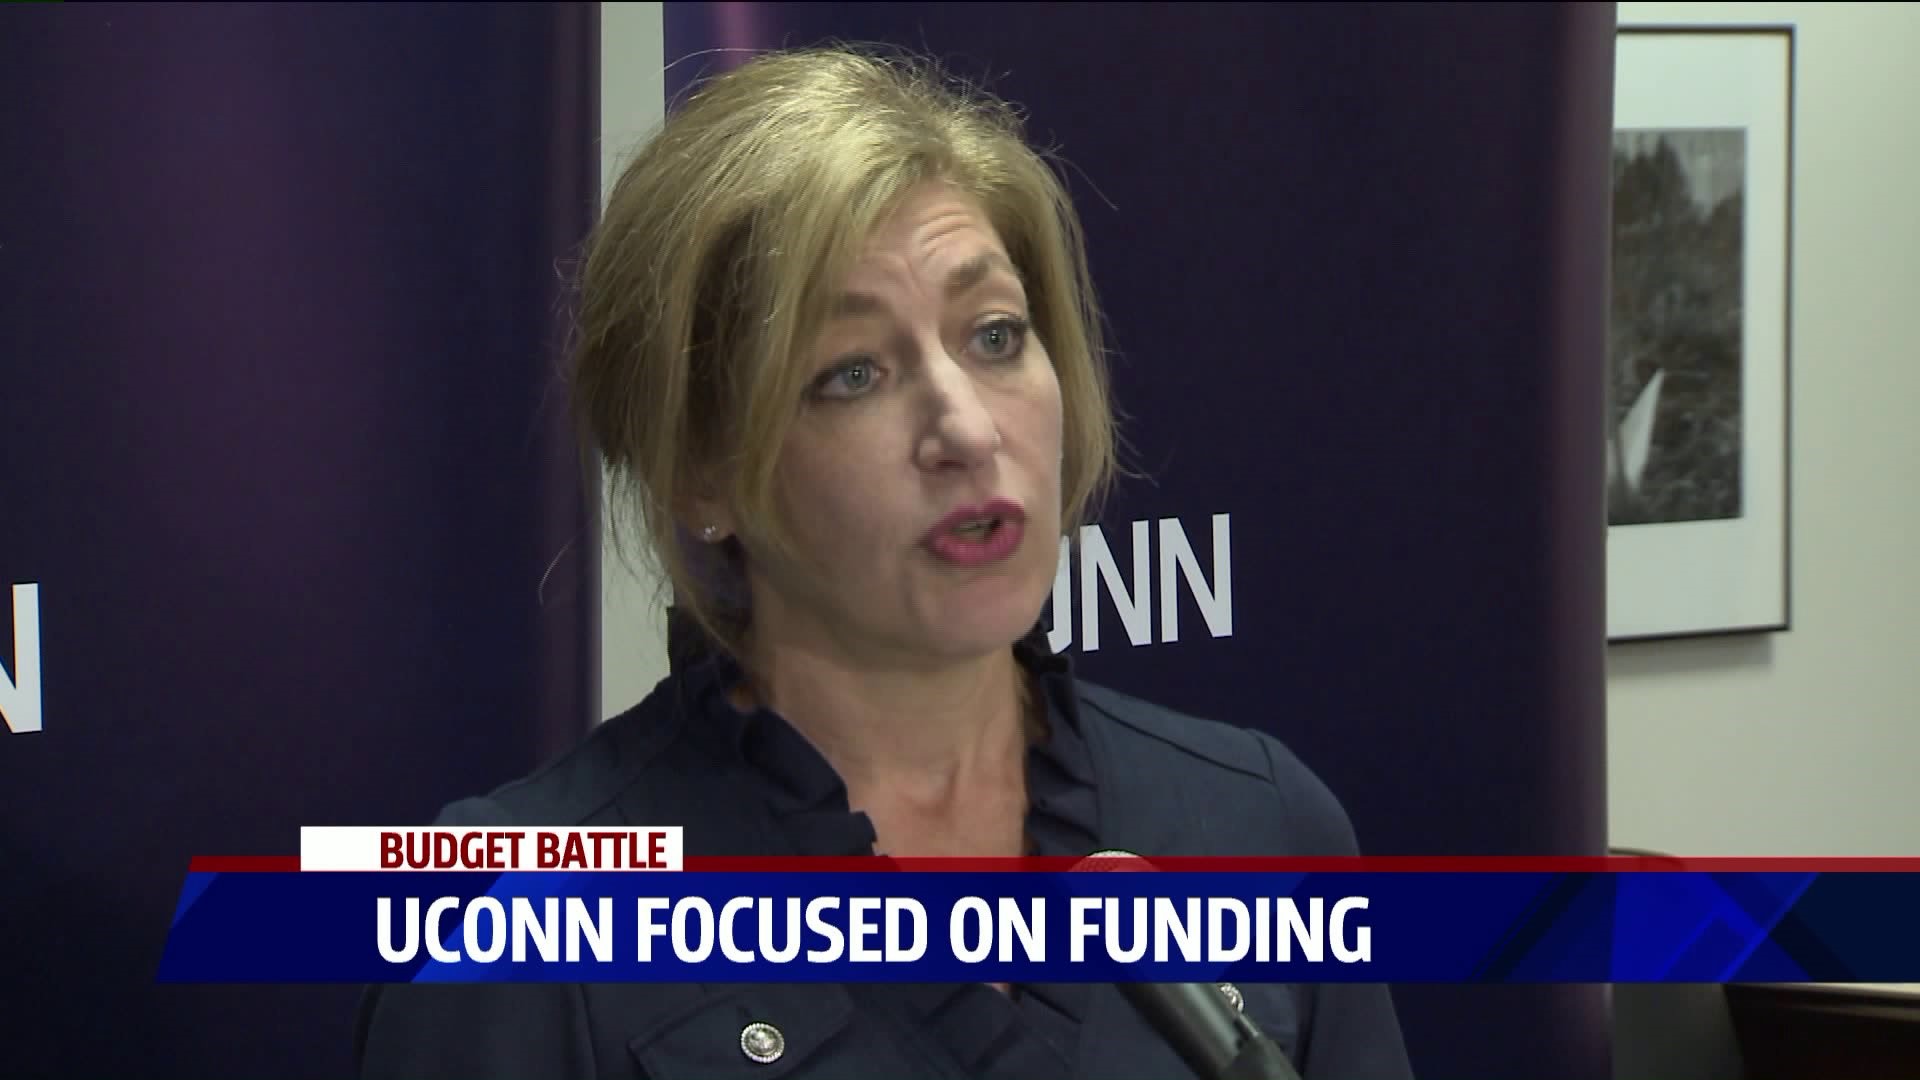 UConn focused on funding